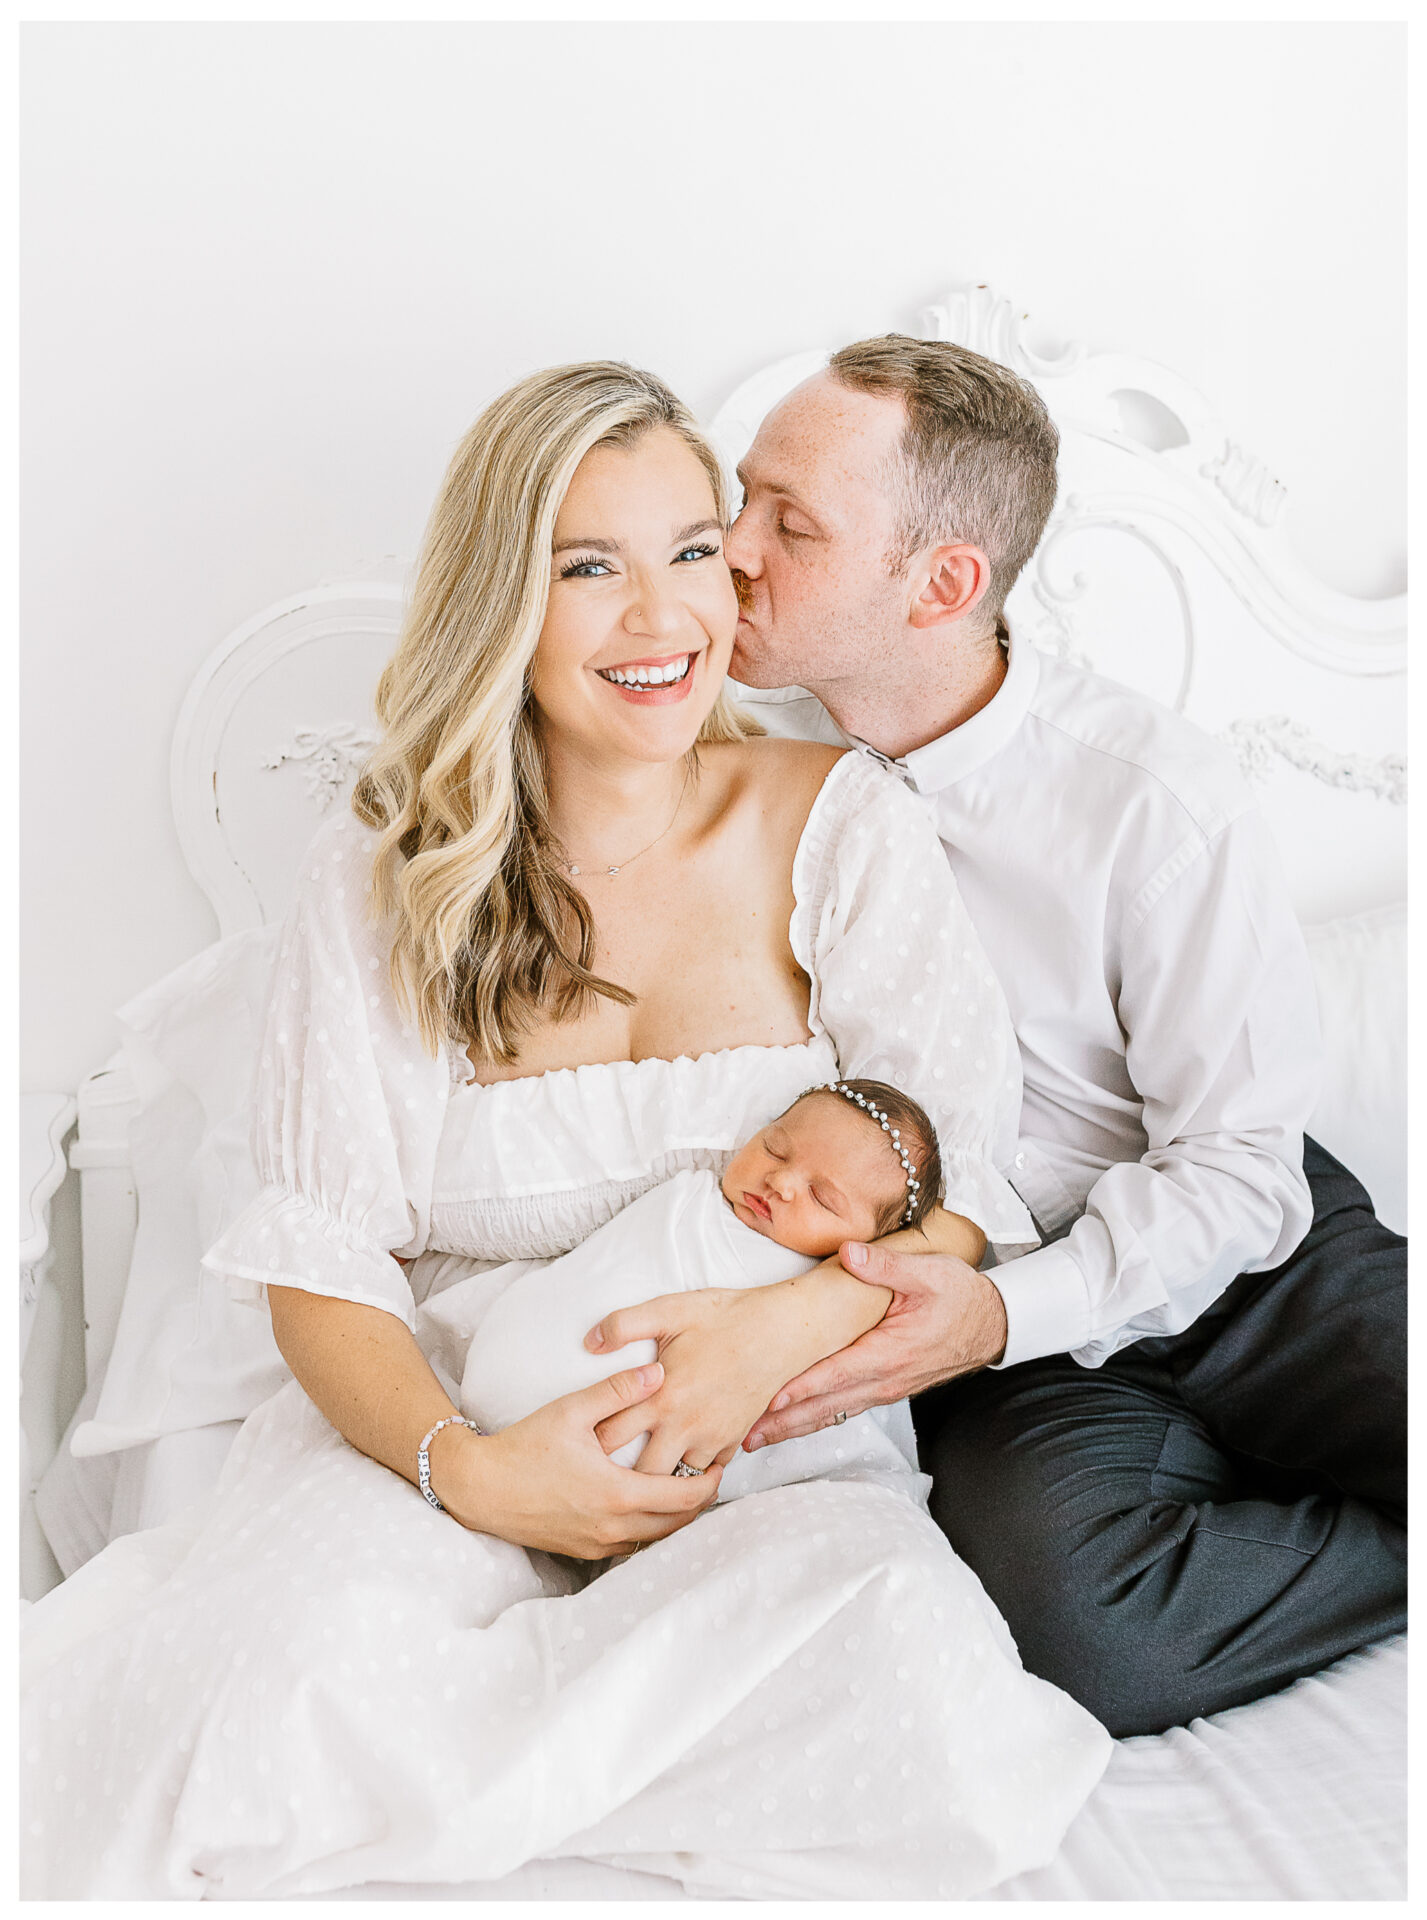 Winter Freire Photography | Dayton, Ohio Newborn Session | Parents holding newborn while husband kisses wife's cheek